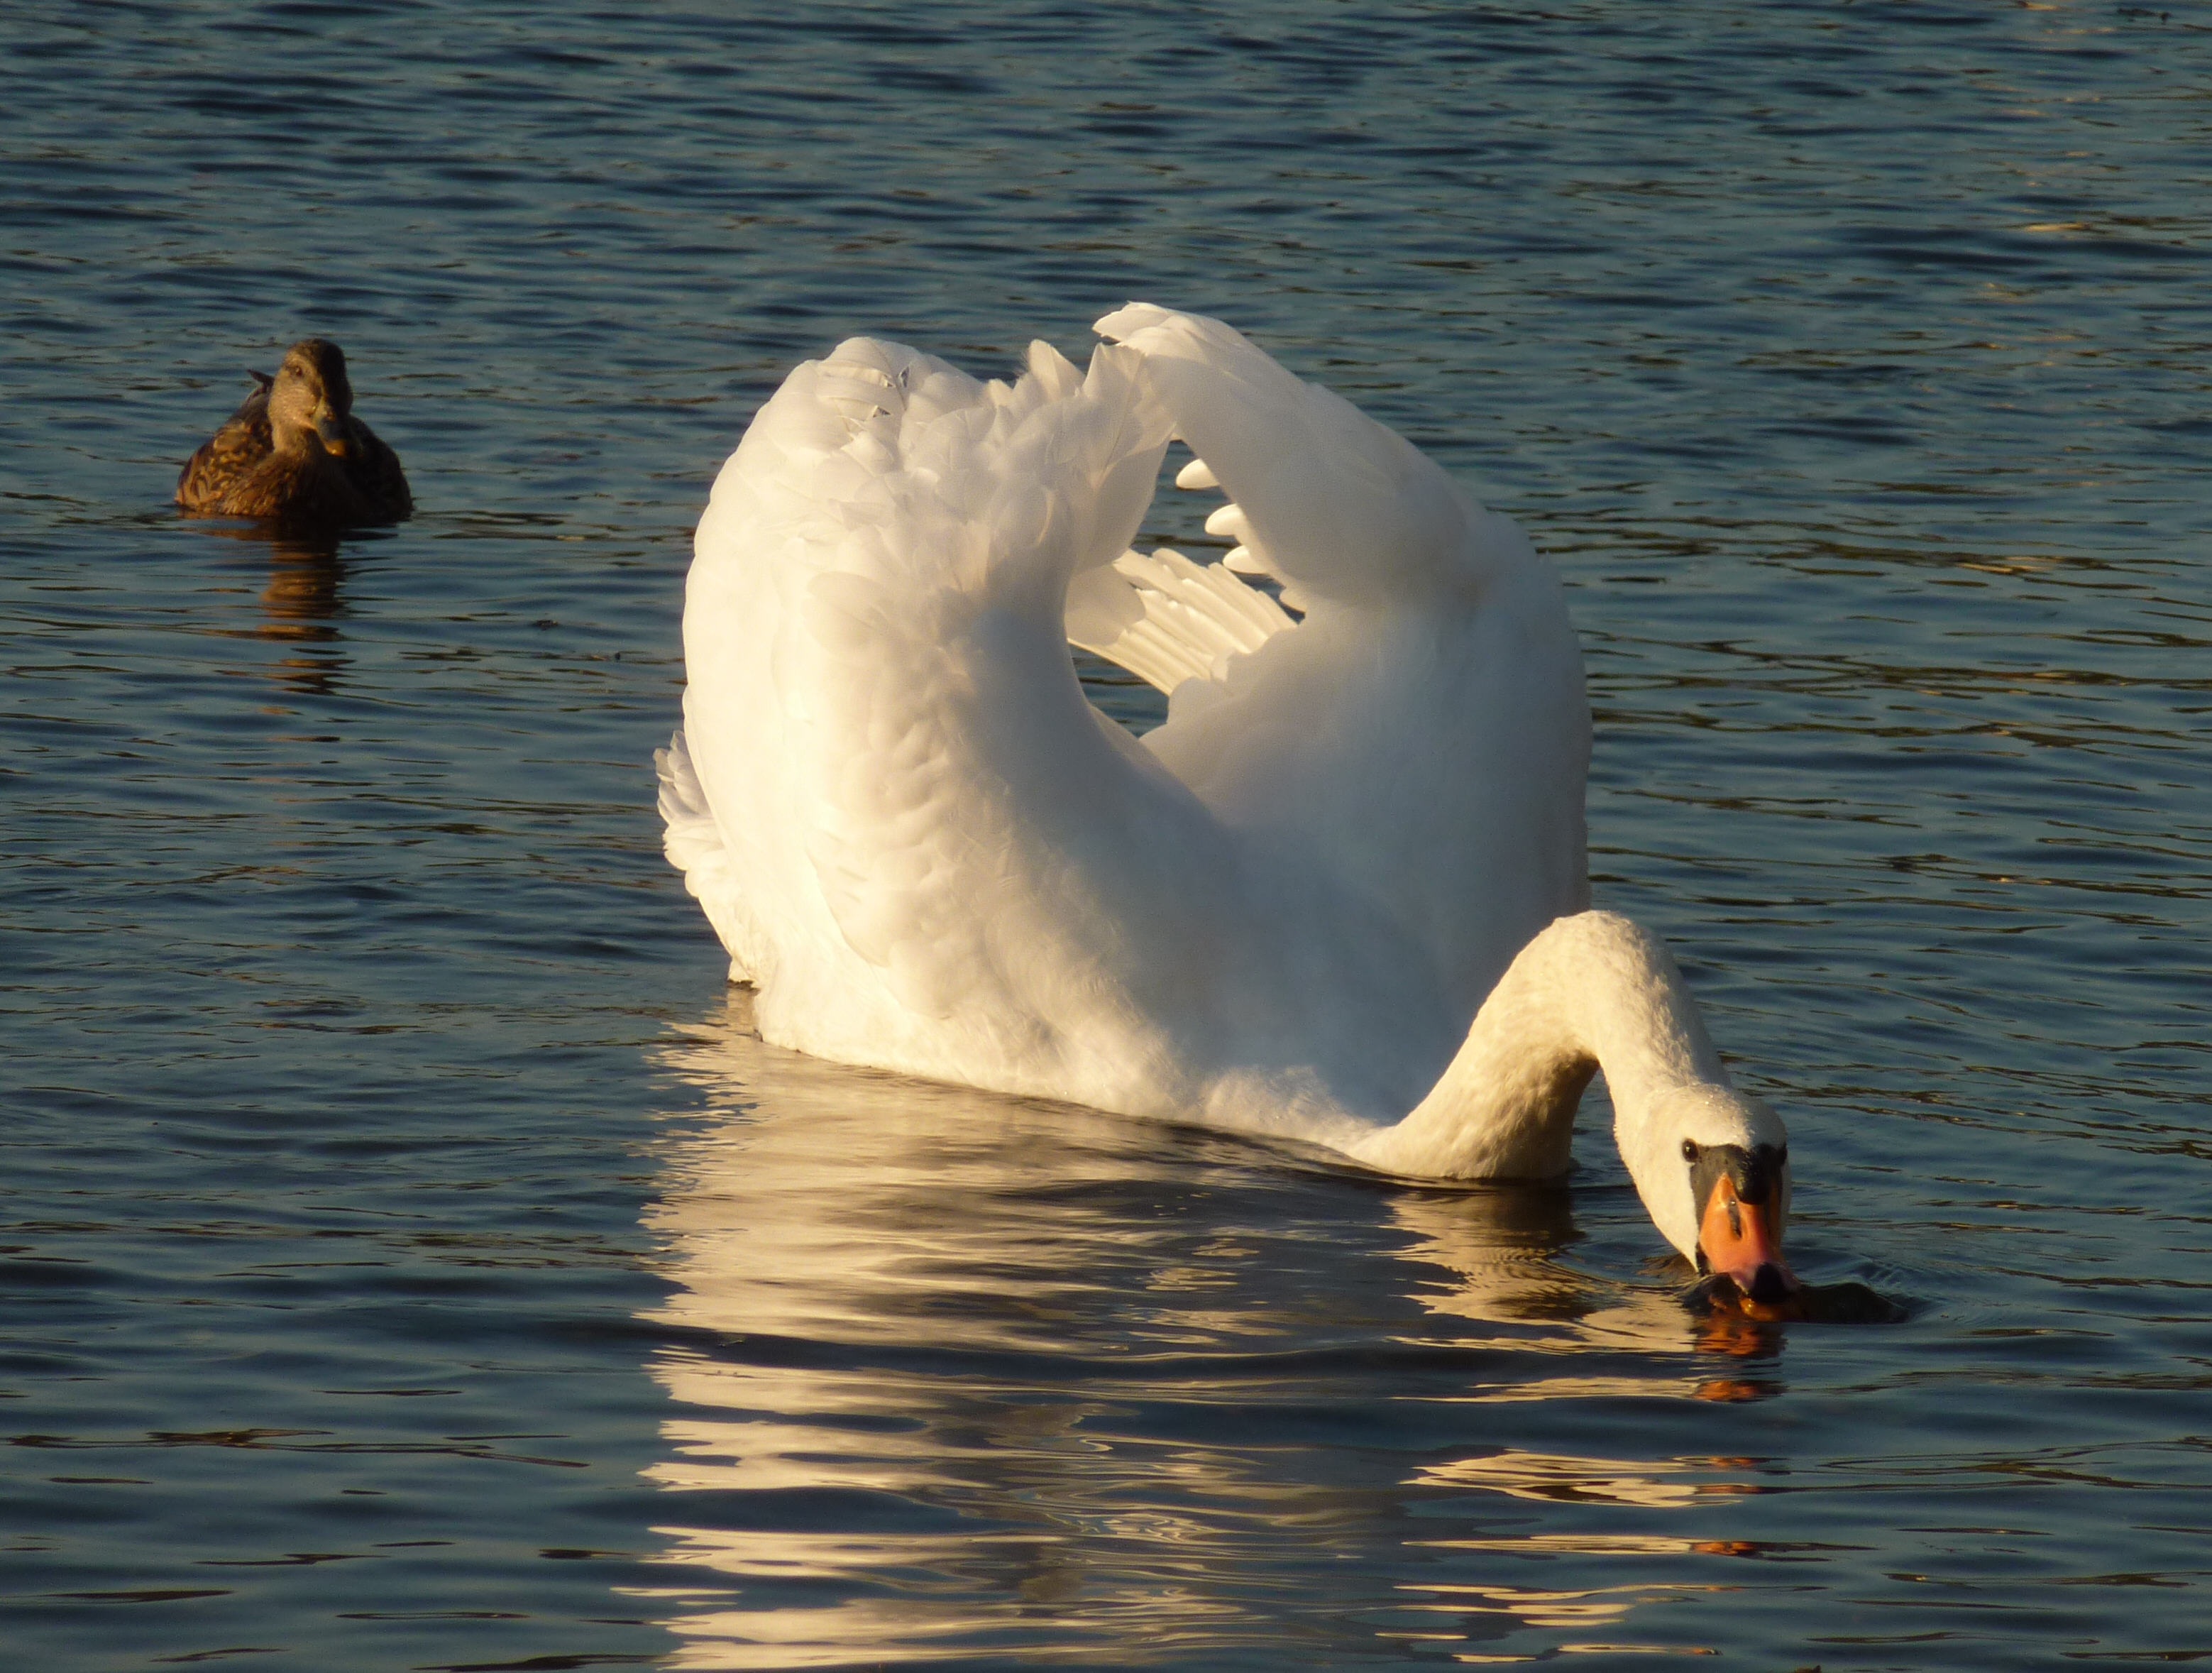 Swan in the lake photo